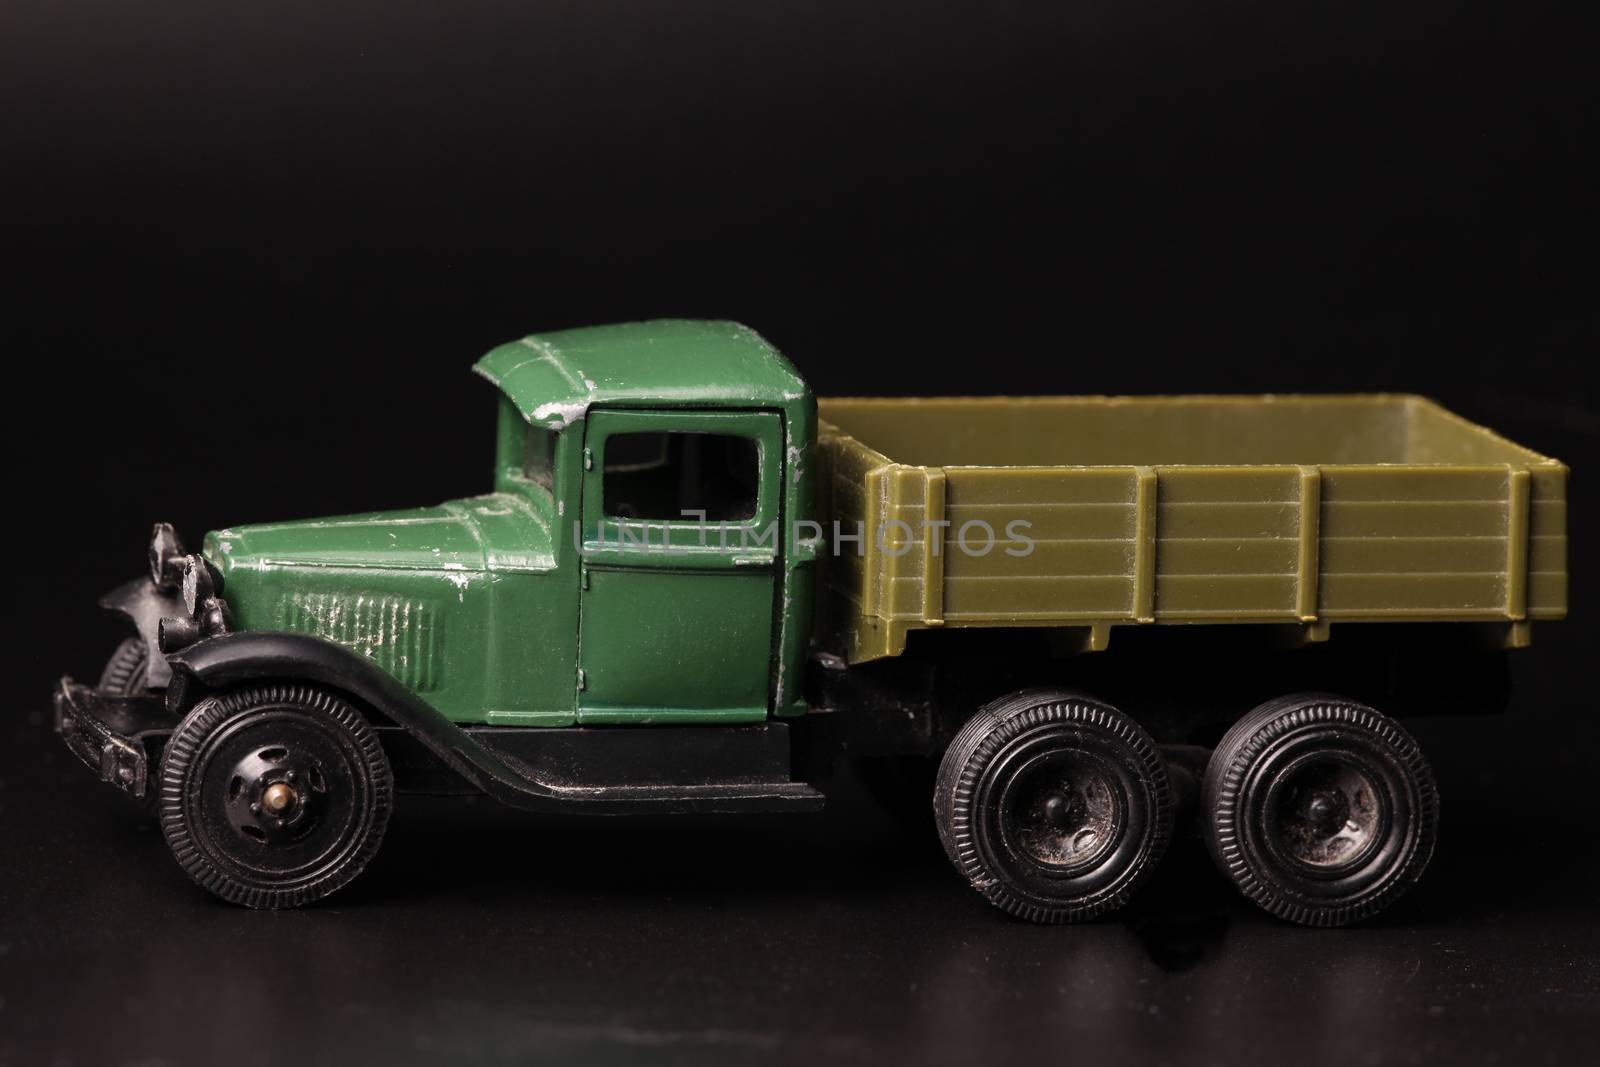 Truck vintage toy by mrivserg